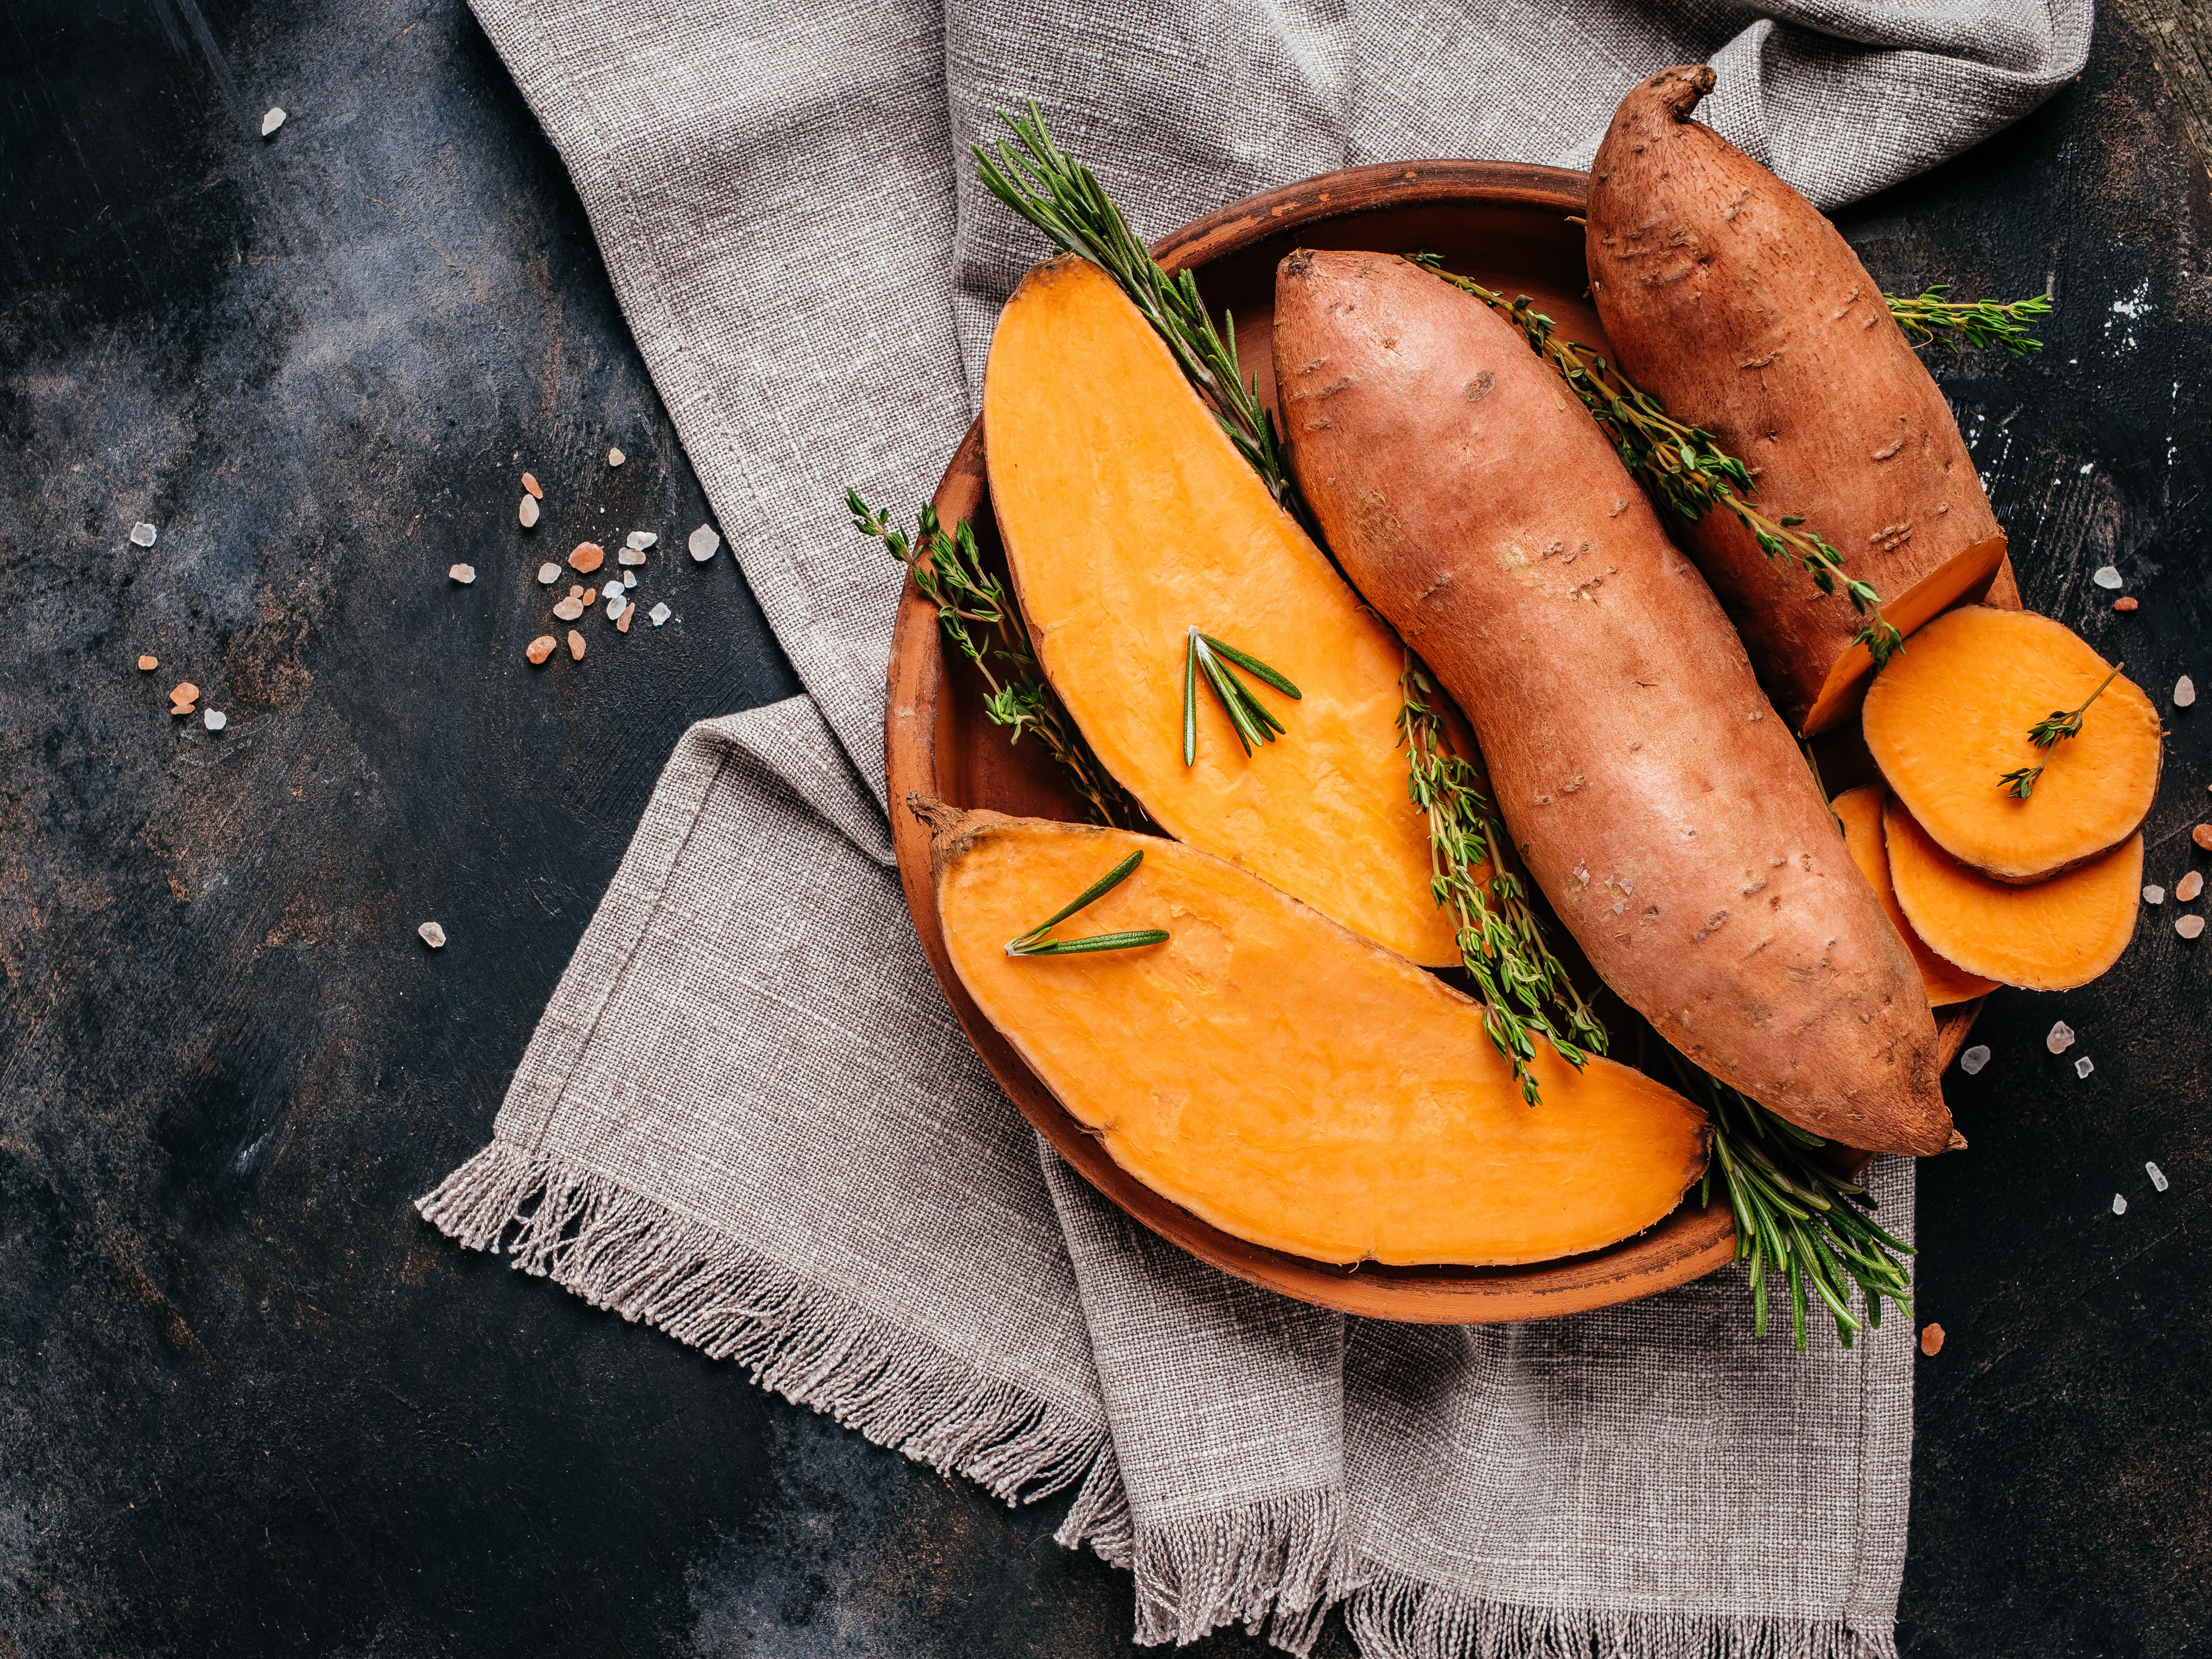 Organic orange sweet potato. Raw sweet potatoes or batatas. vegan food ingredient. banner, menu, recipe place for text, top view.